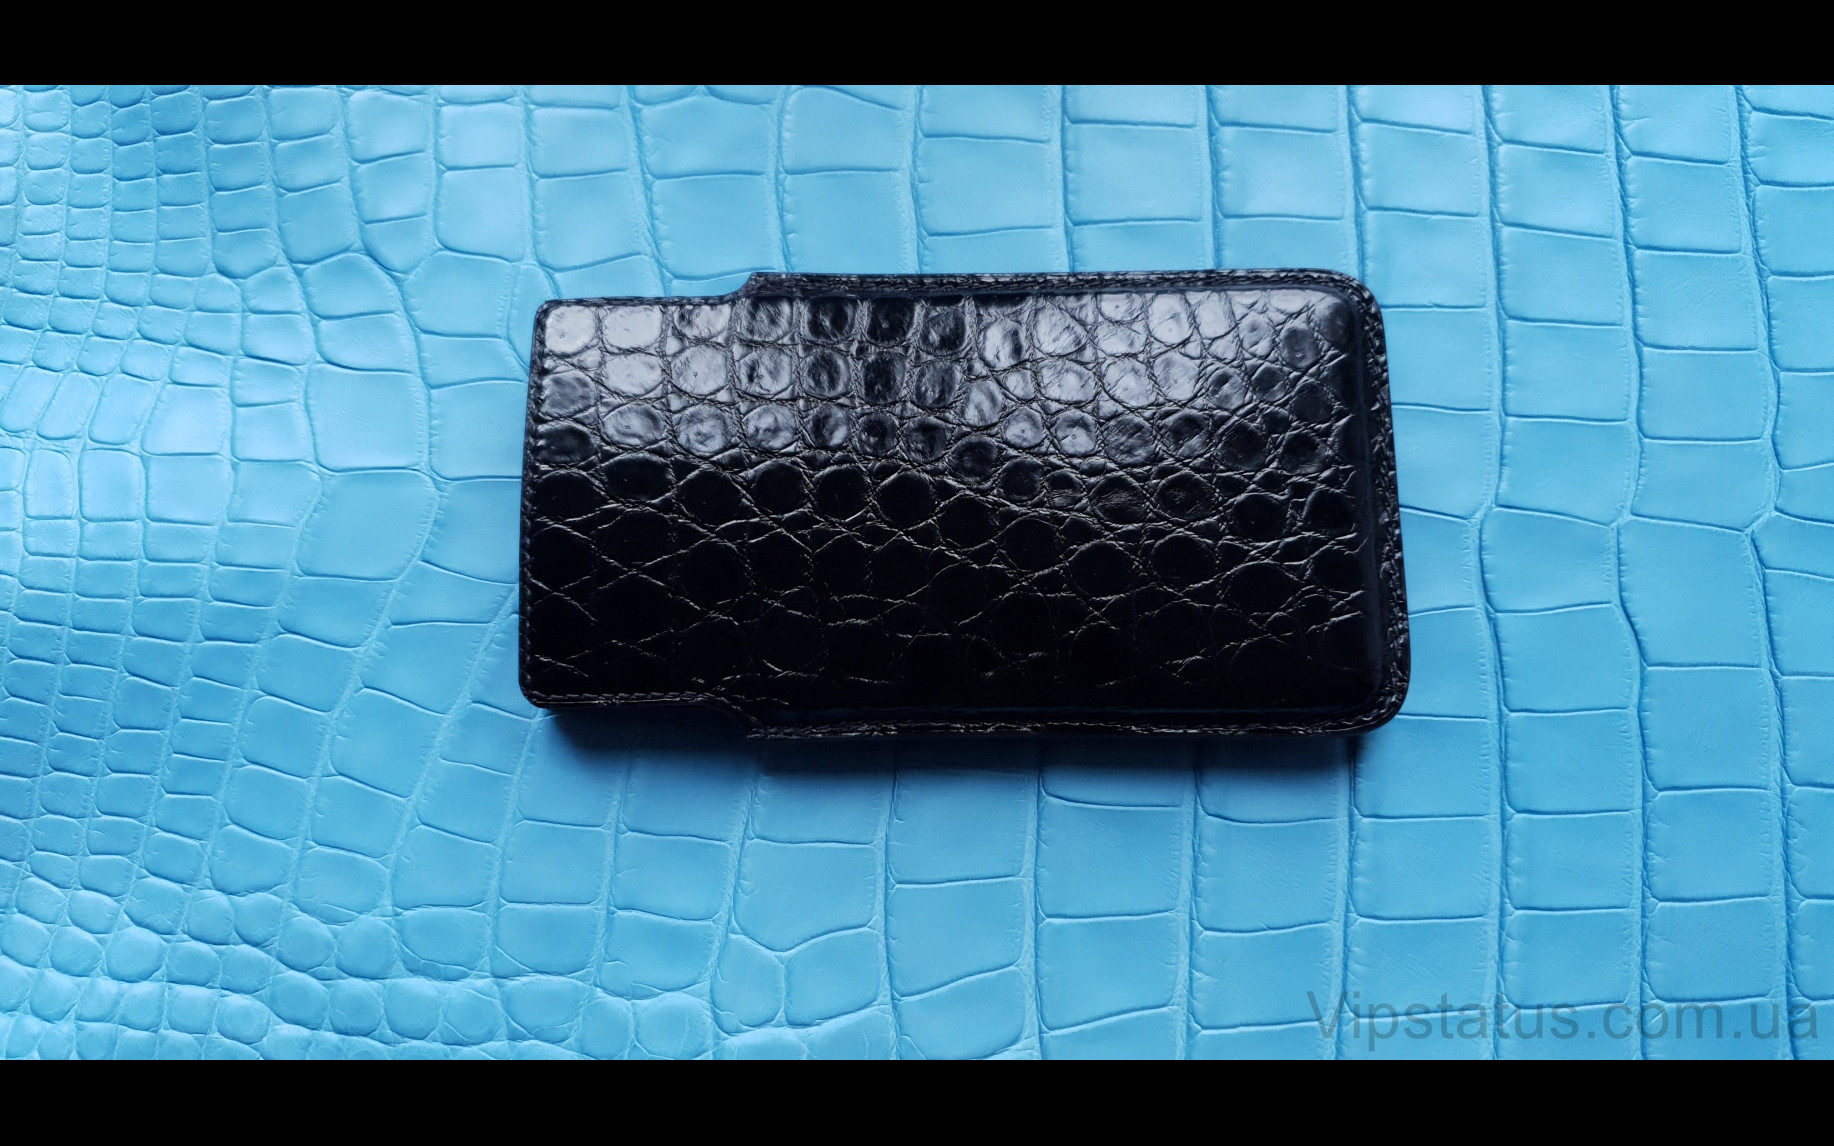 Elite Black Gloss Лакшери кейс IPhone 11 12 13 Pro Max кожа крокодила Black Gloss Luxury Case IPhone 11 12 13 Pro Max Crocodile leather image 1